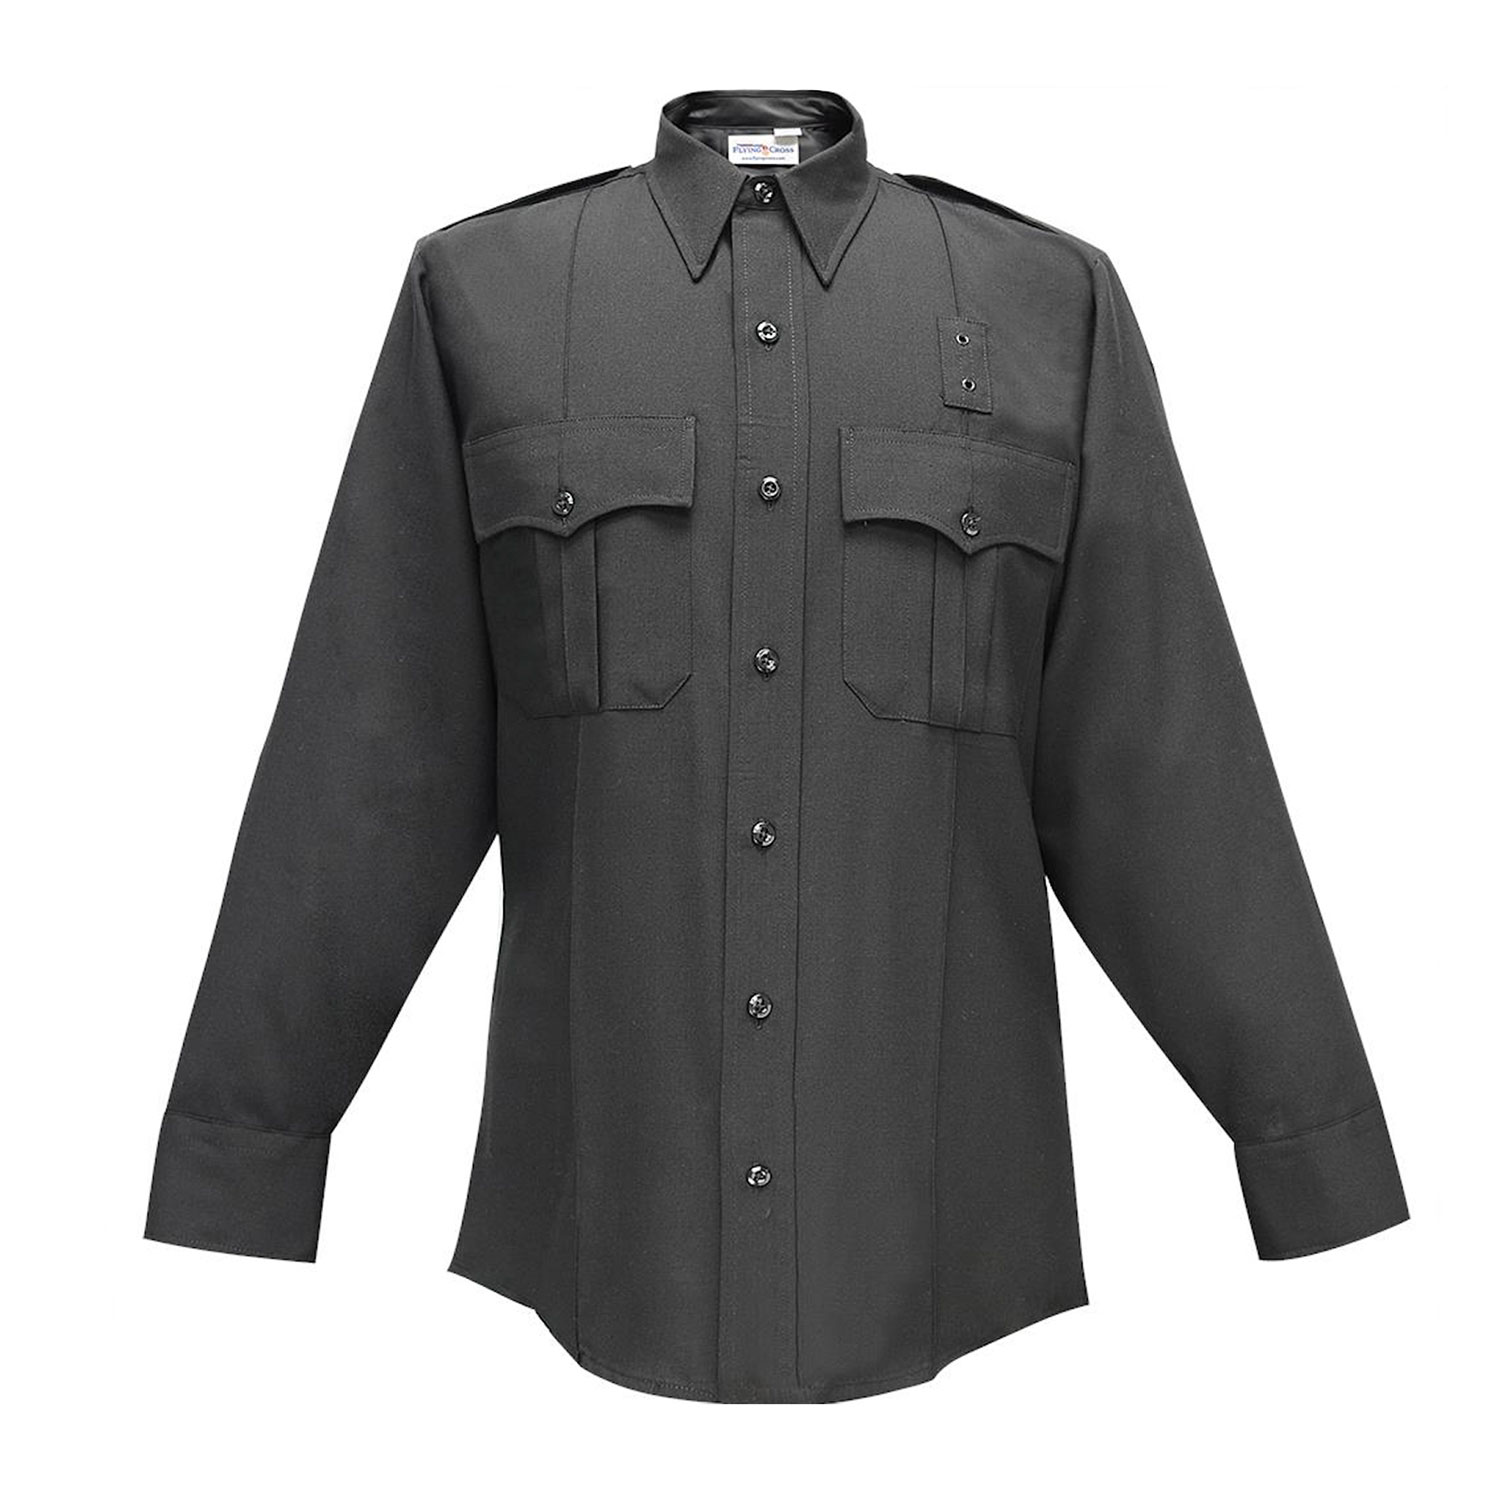 Flying Cross Men's Long Sleeve Zipper Front Poly Wool Shirt